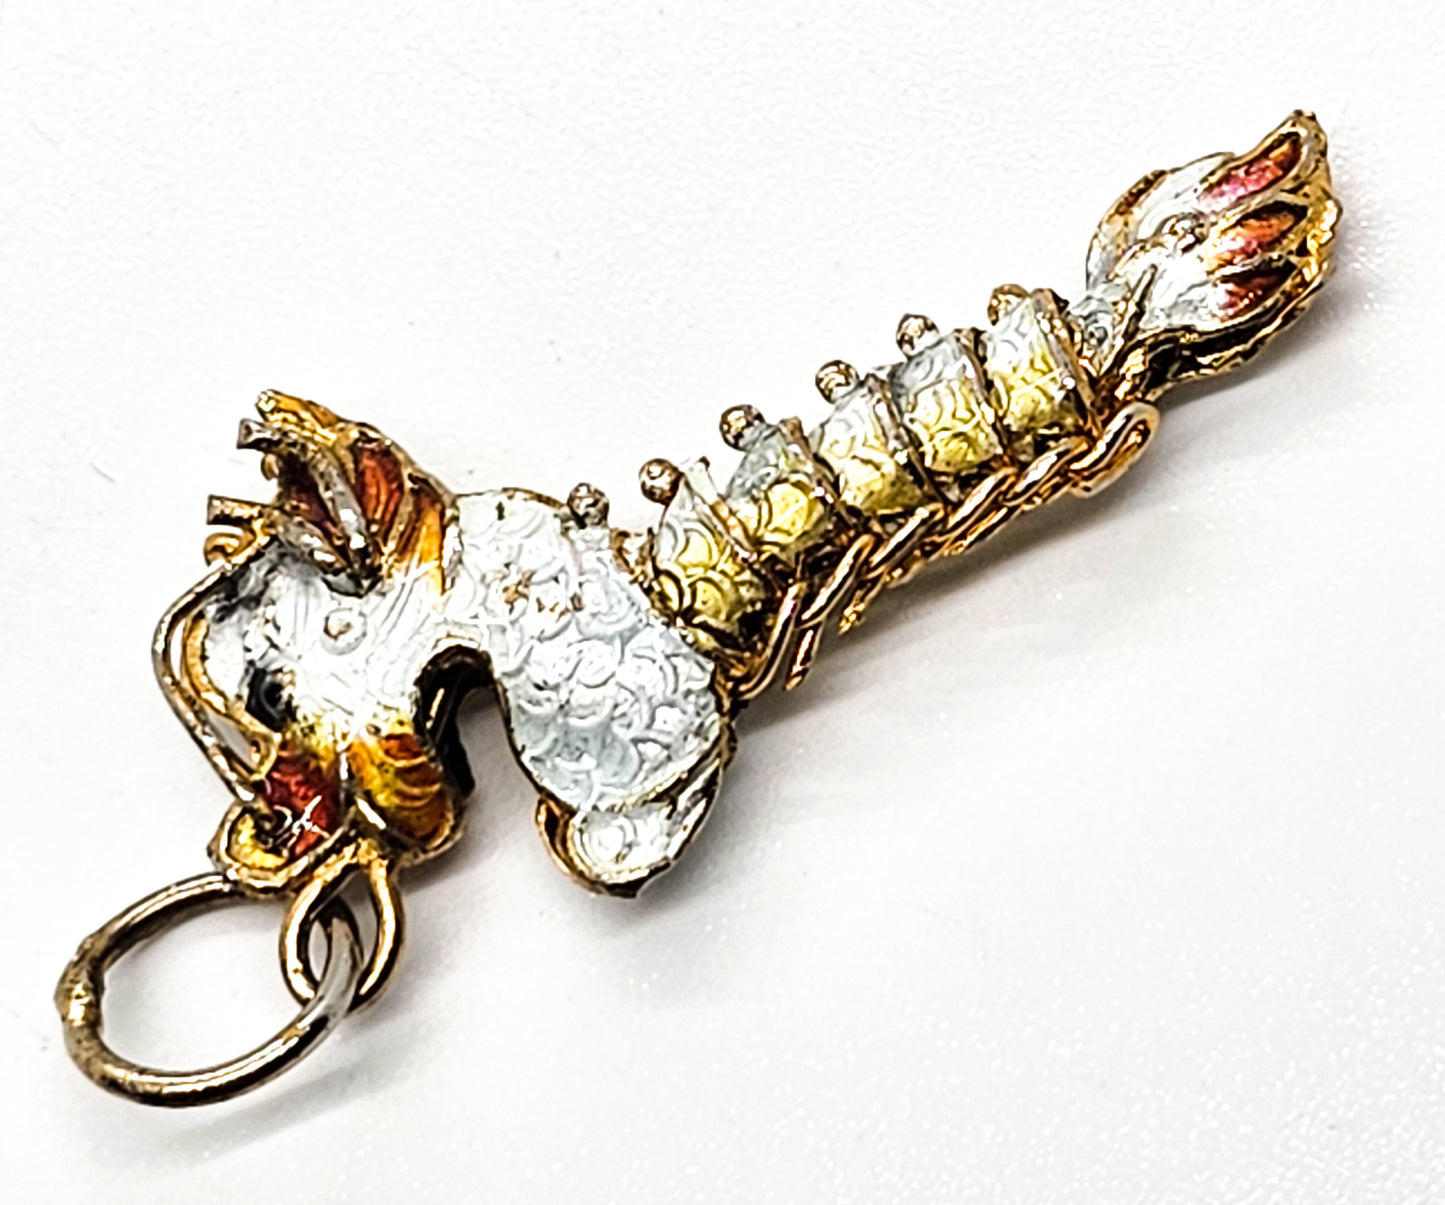 Chinese Cloisonne enamel articulated vintage white vintage dragon pendant